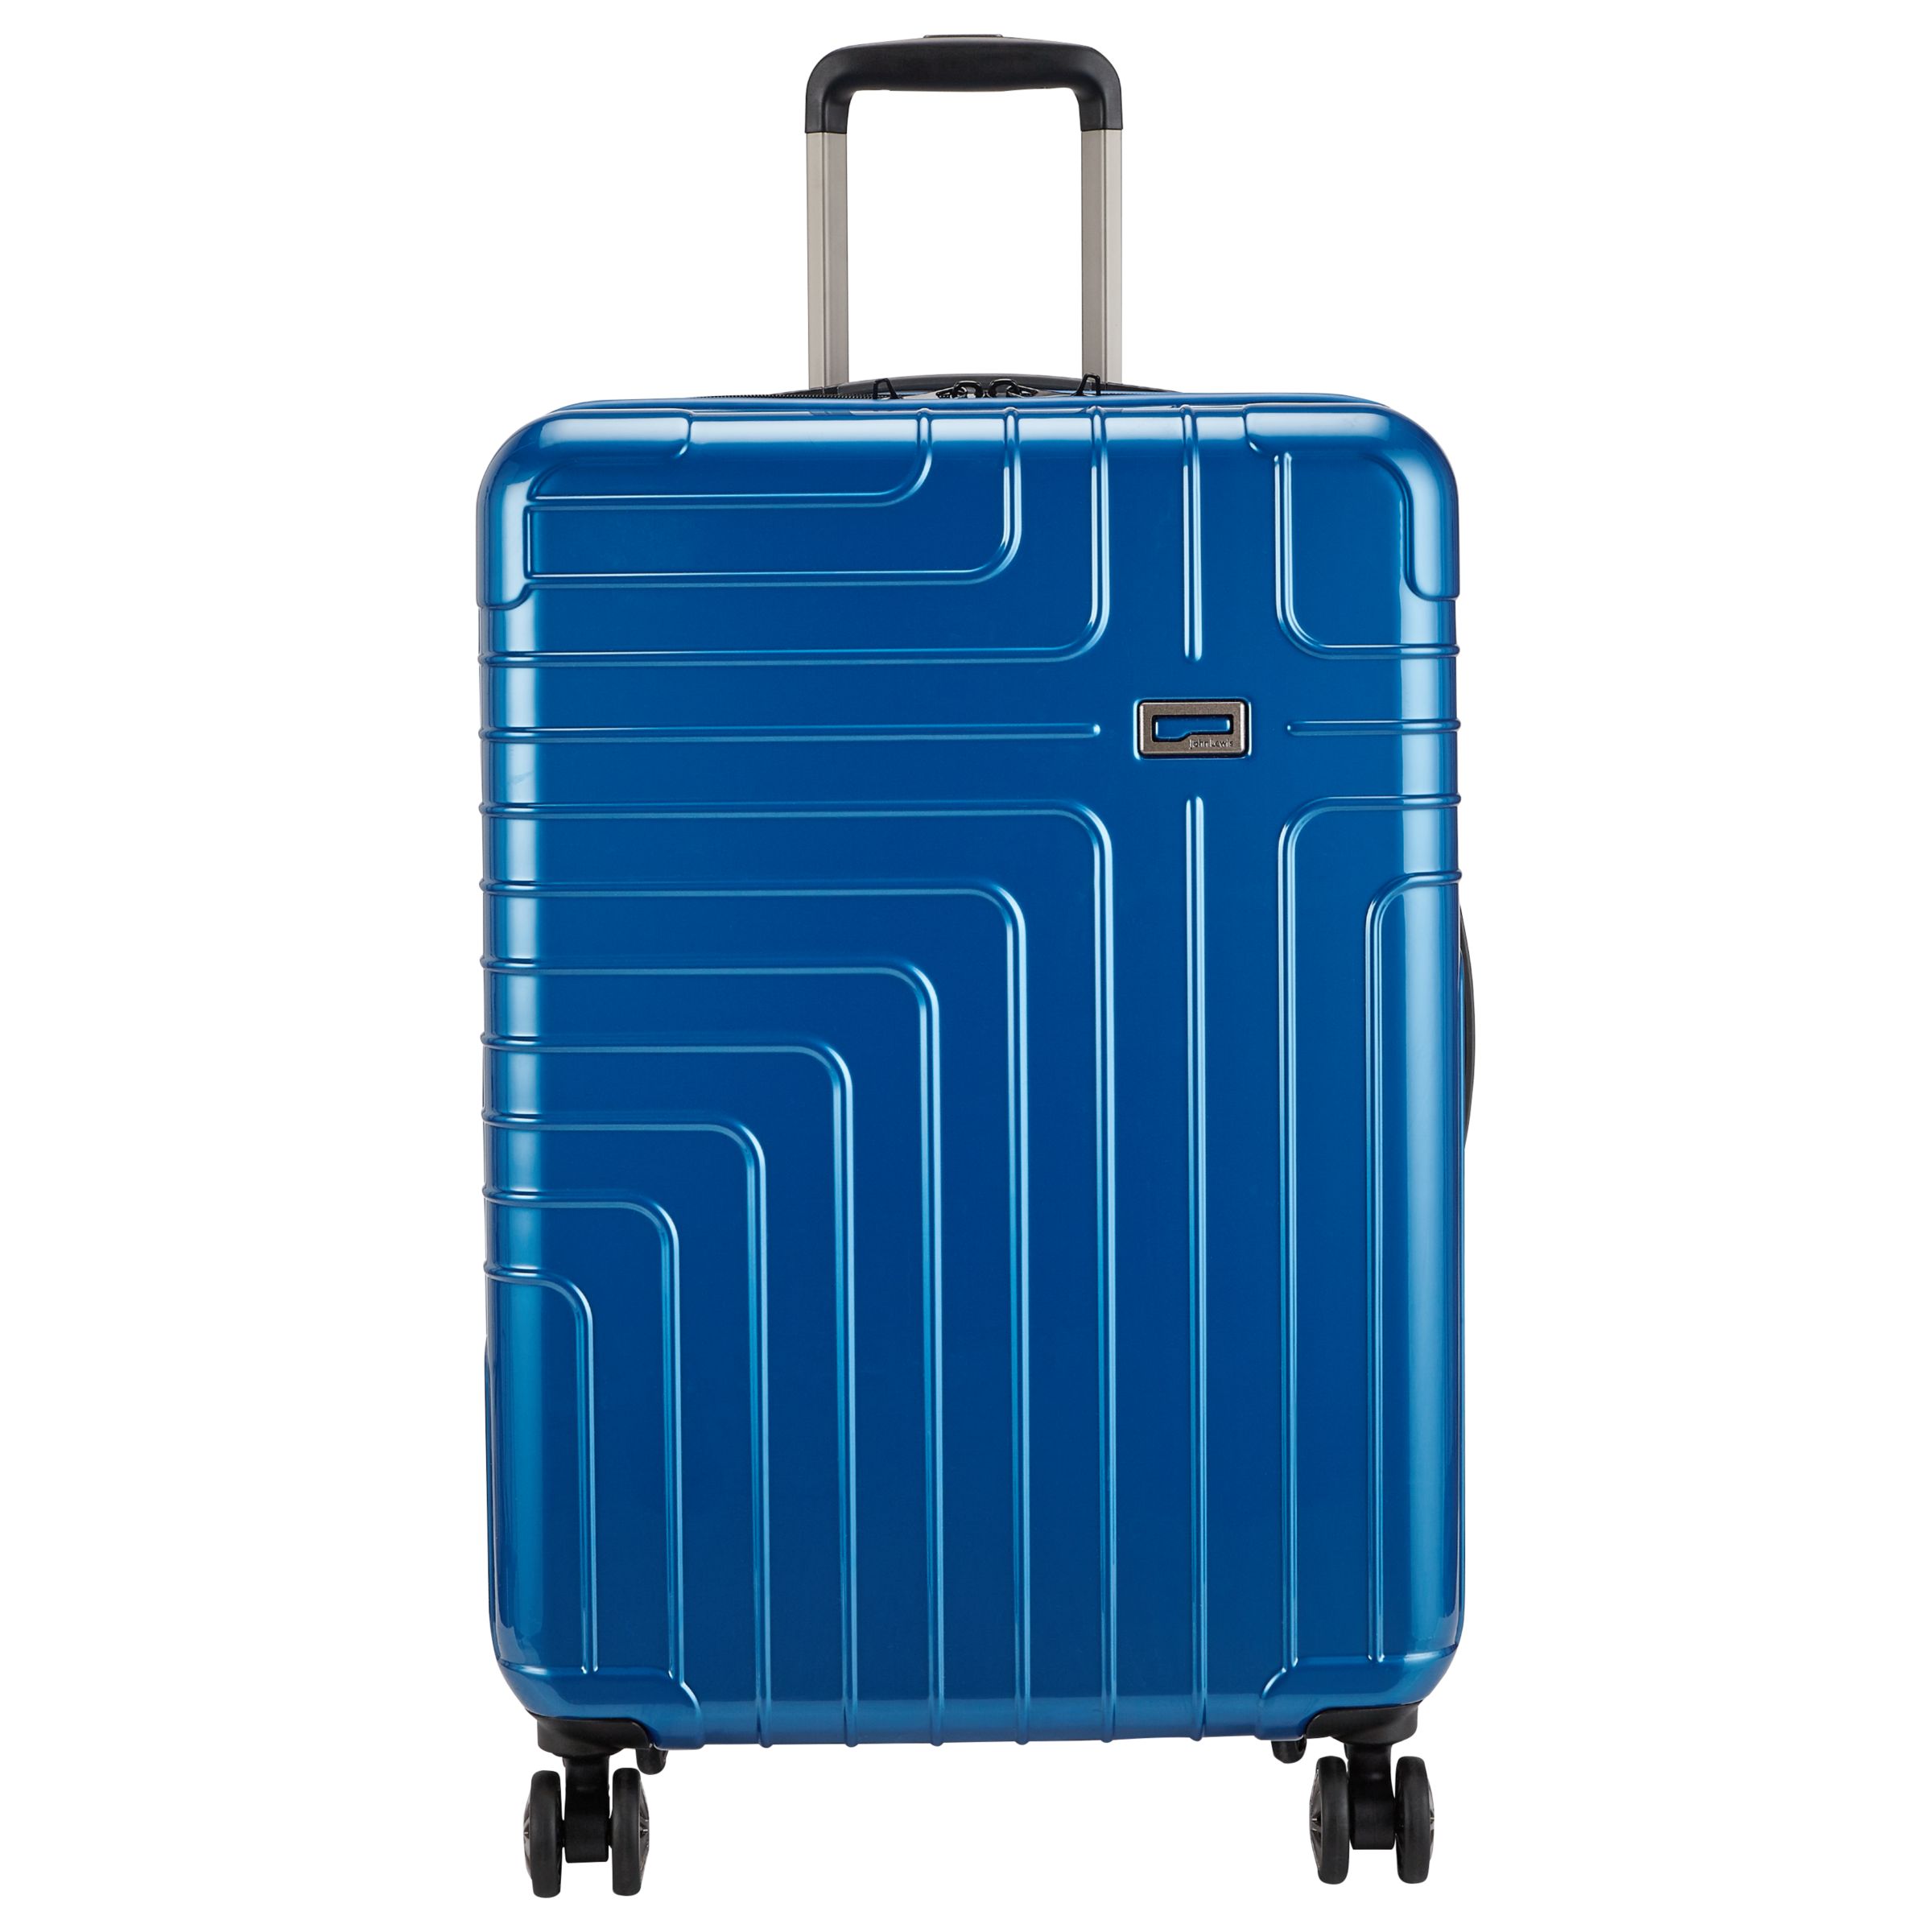 John Lewis & Partners Zurich 68cm 4-Wheel Suitcase